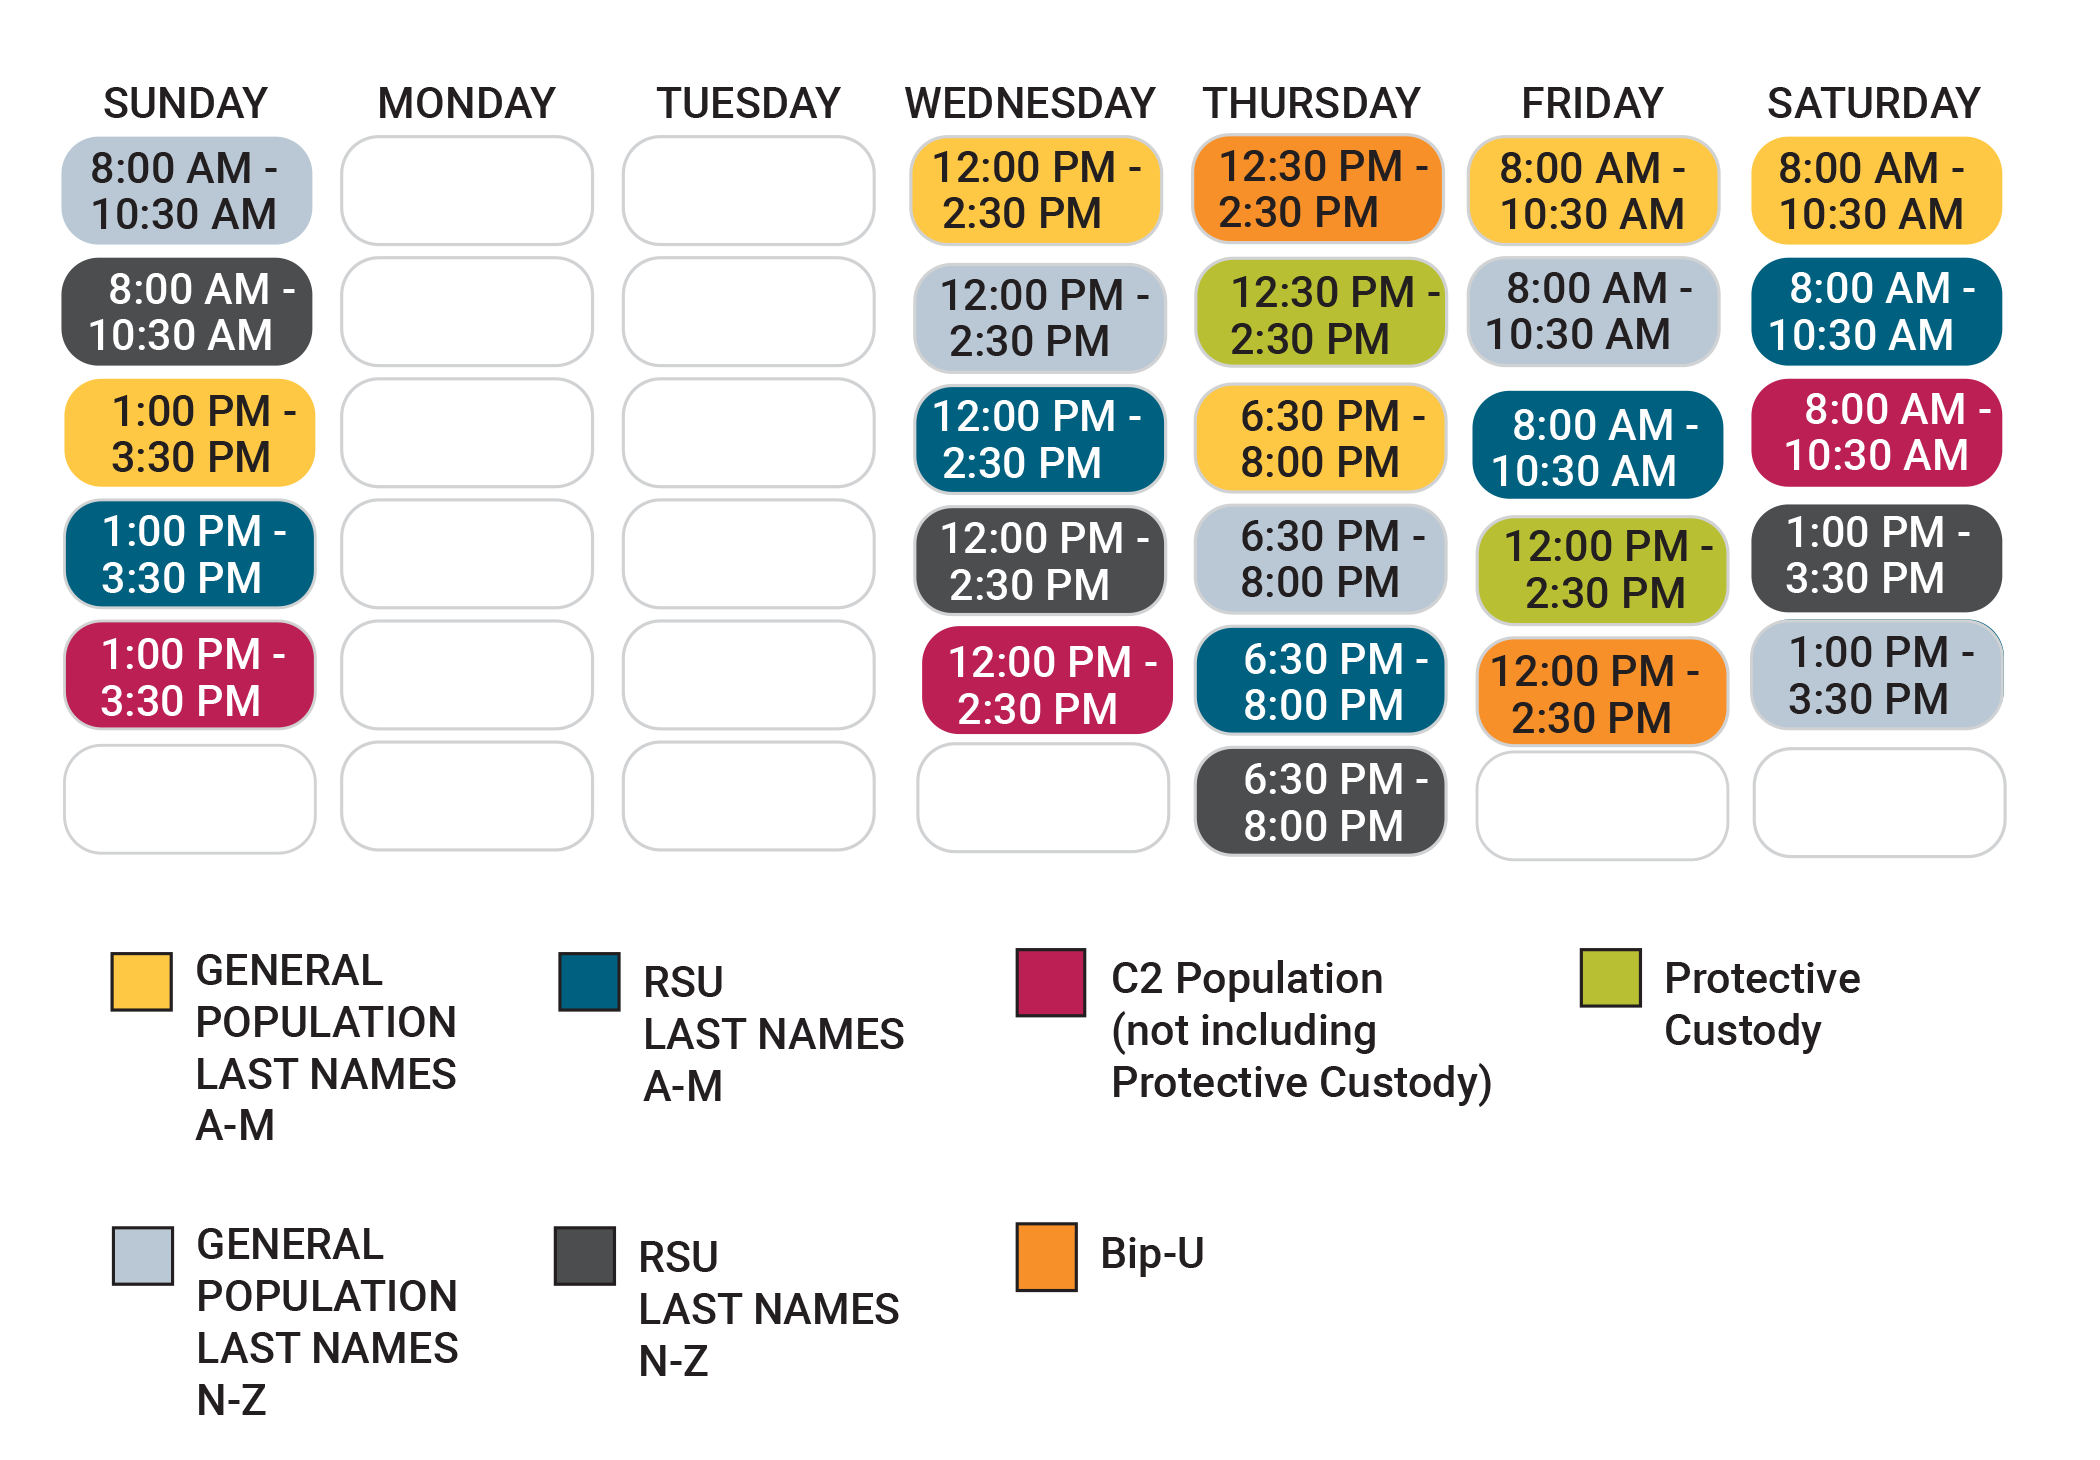 NCCW Schedule revised 1-14-22 crop.png